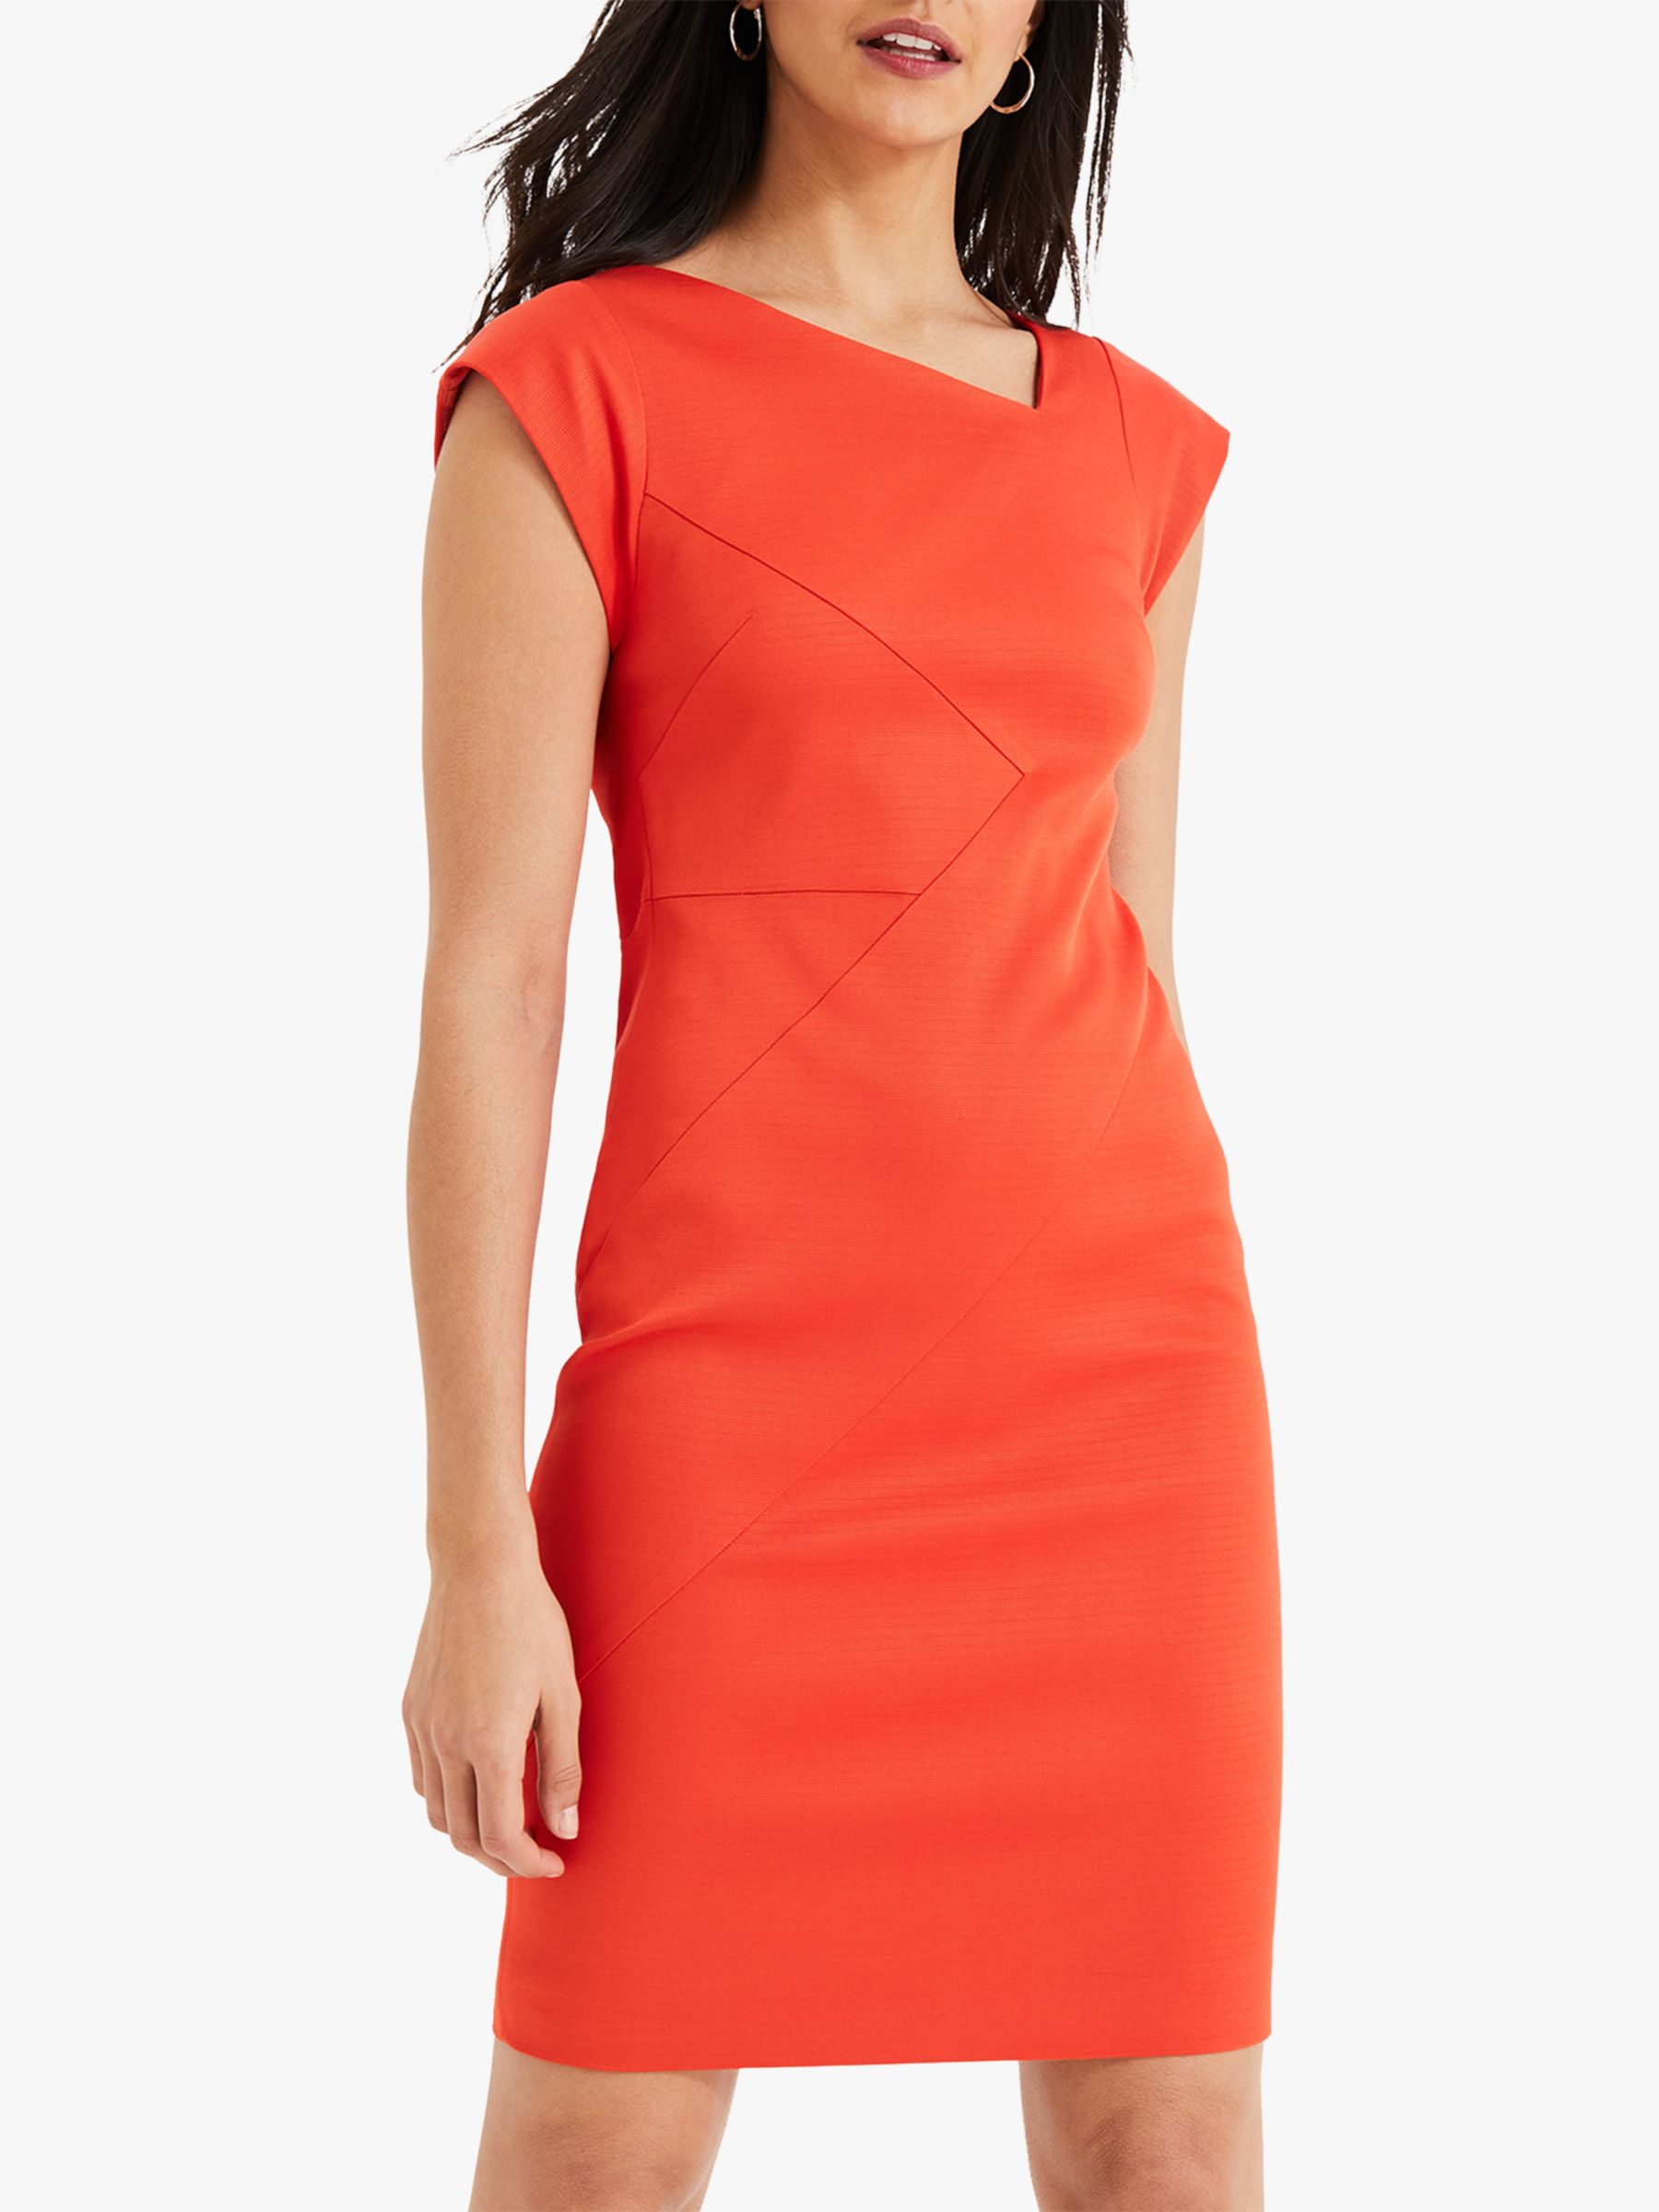 orange fitted dress